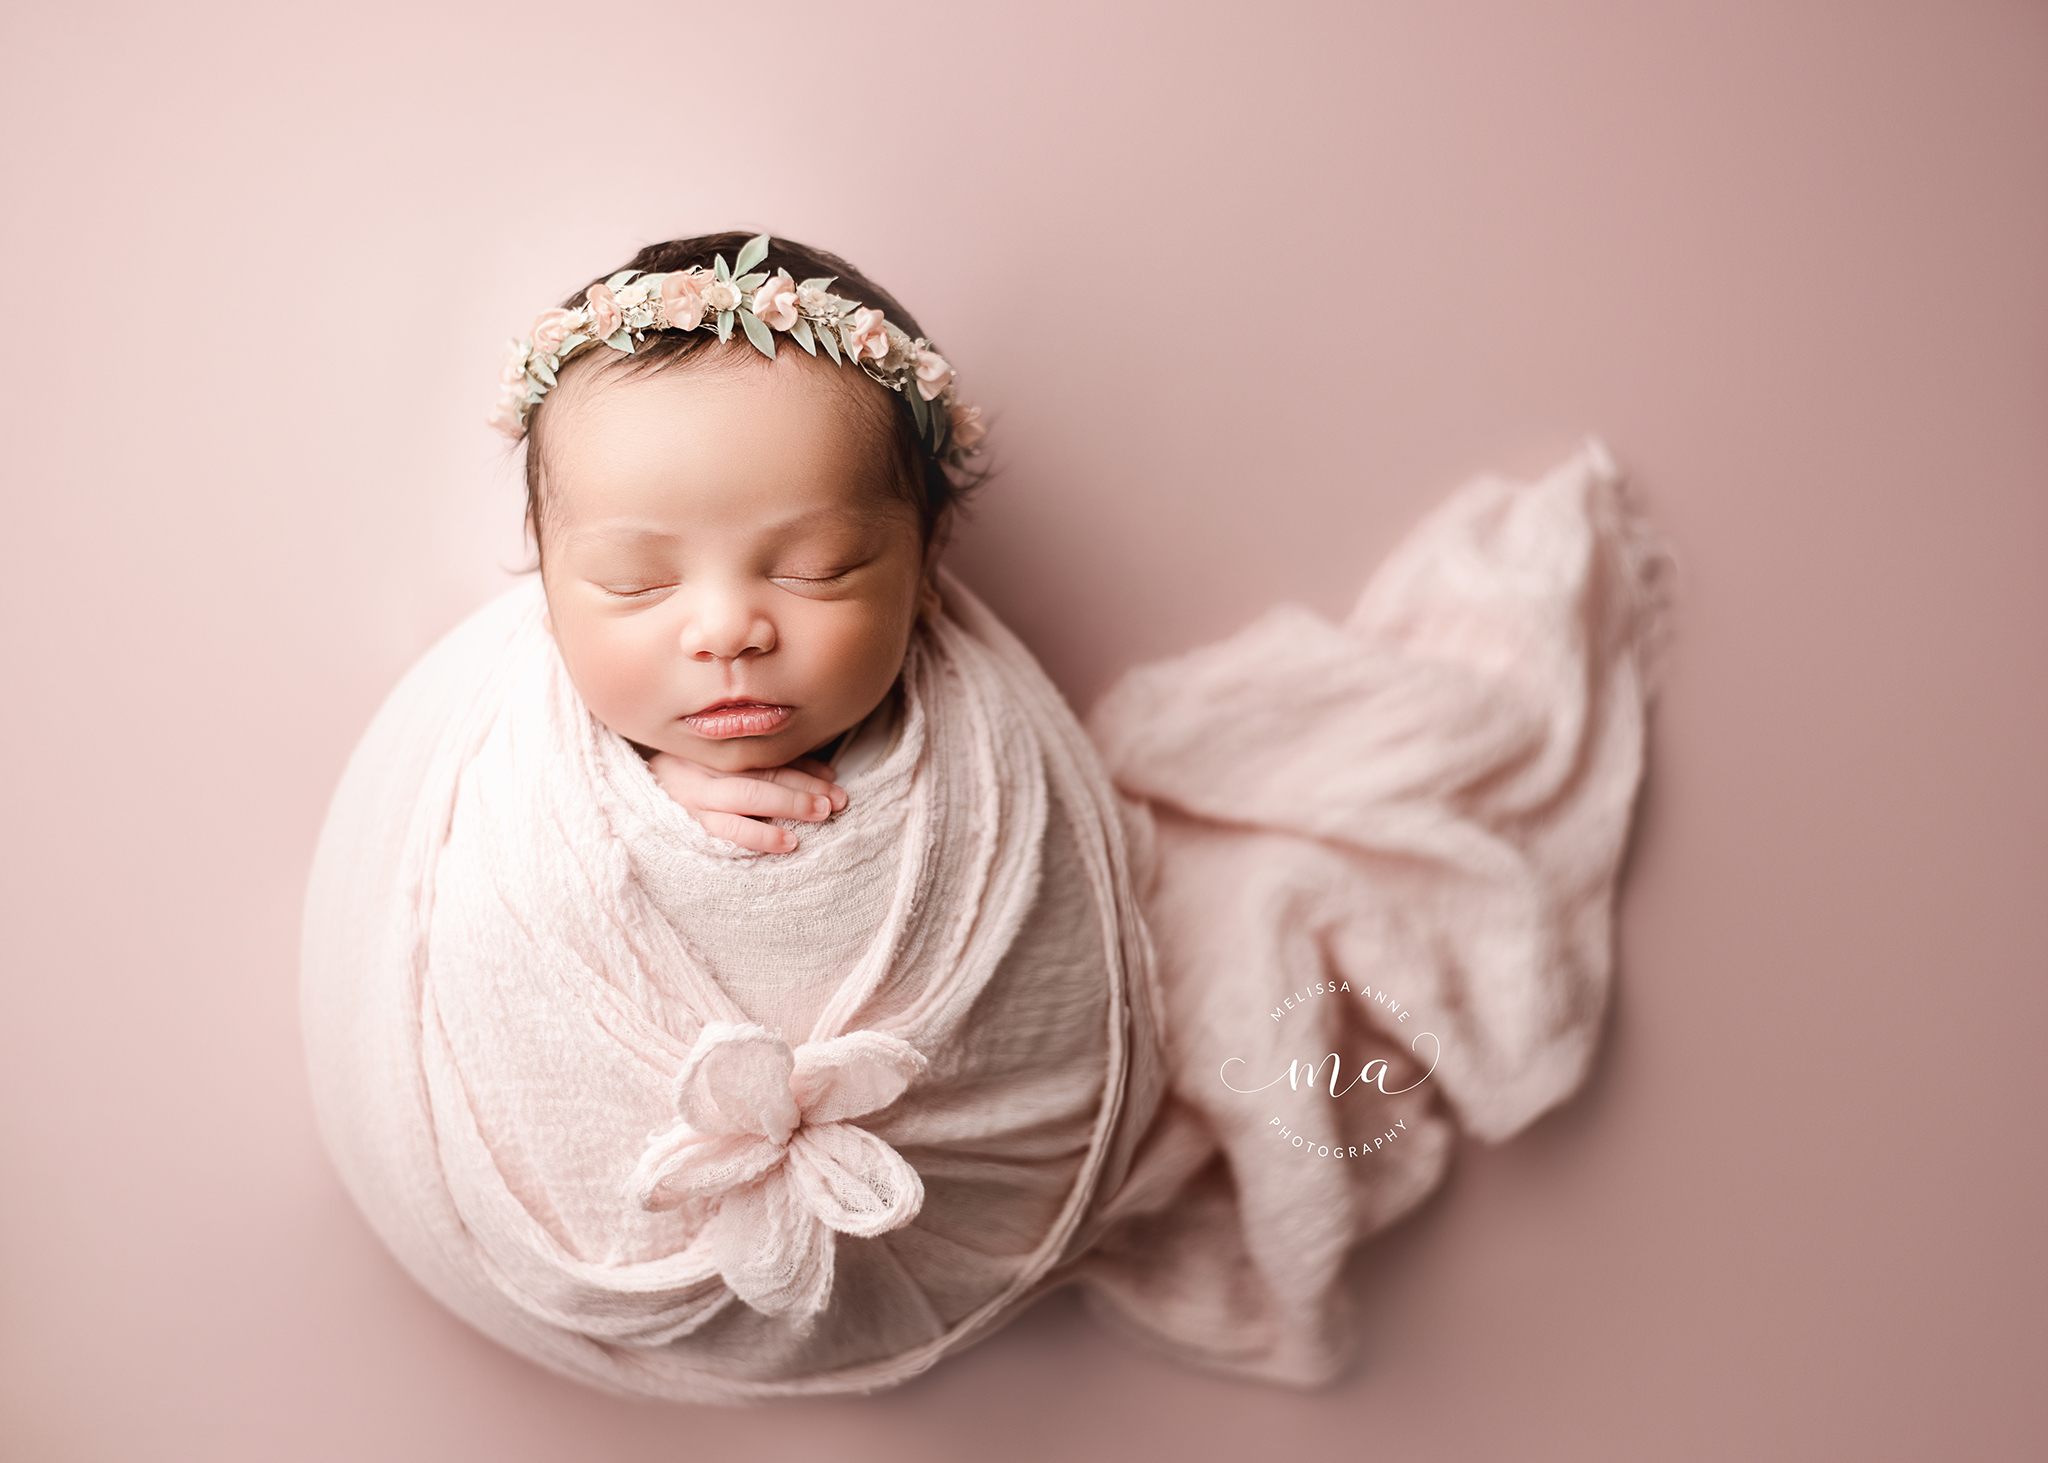 Newborn Photography by Sarah Hart Photography Newborn Baby Photography  Session: Meet baby Evie